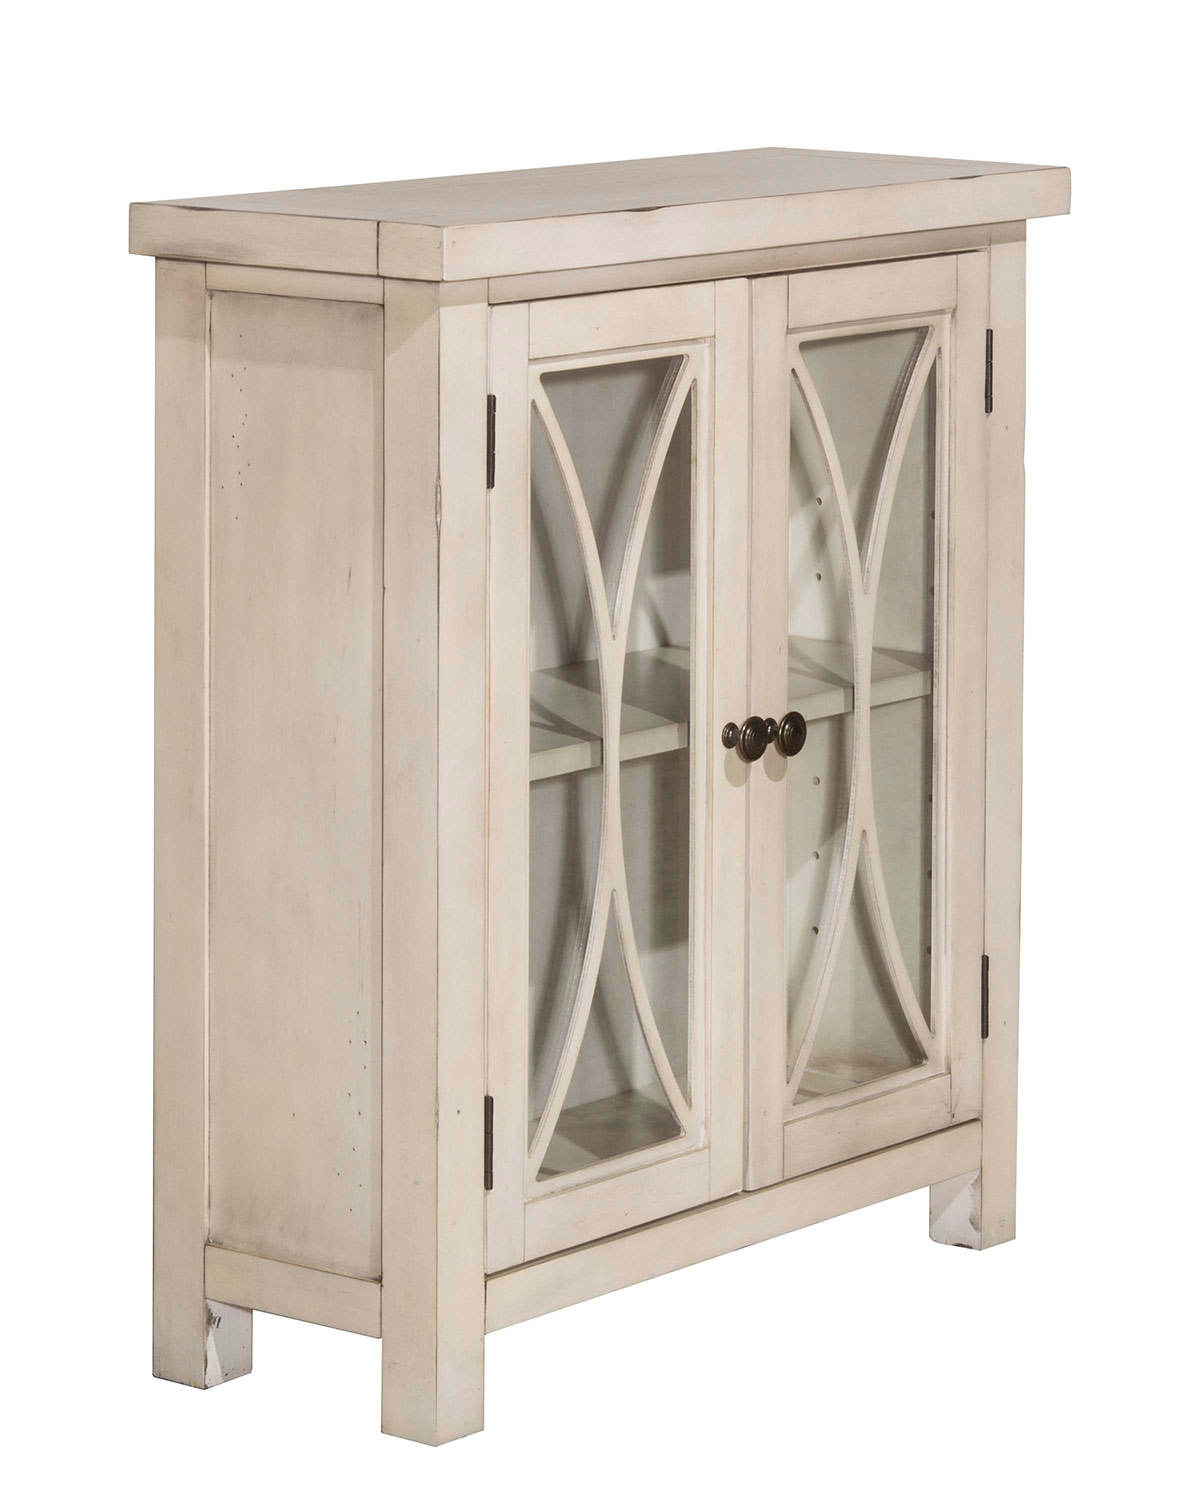 Hillsdale Bayside 2-Door Cabinet - Antique White